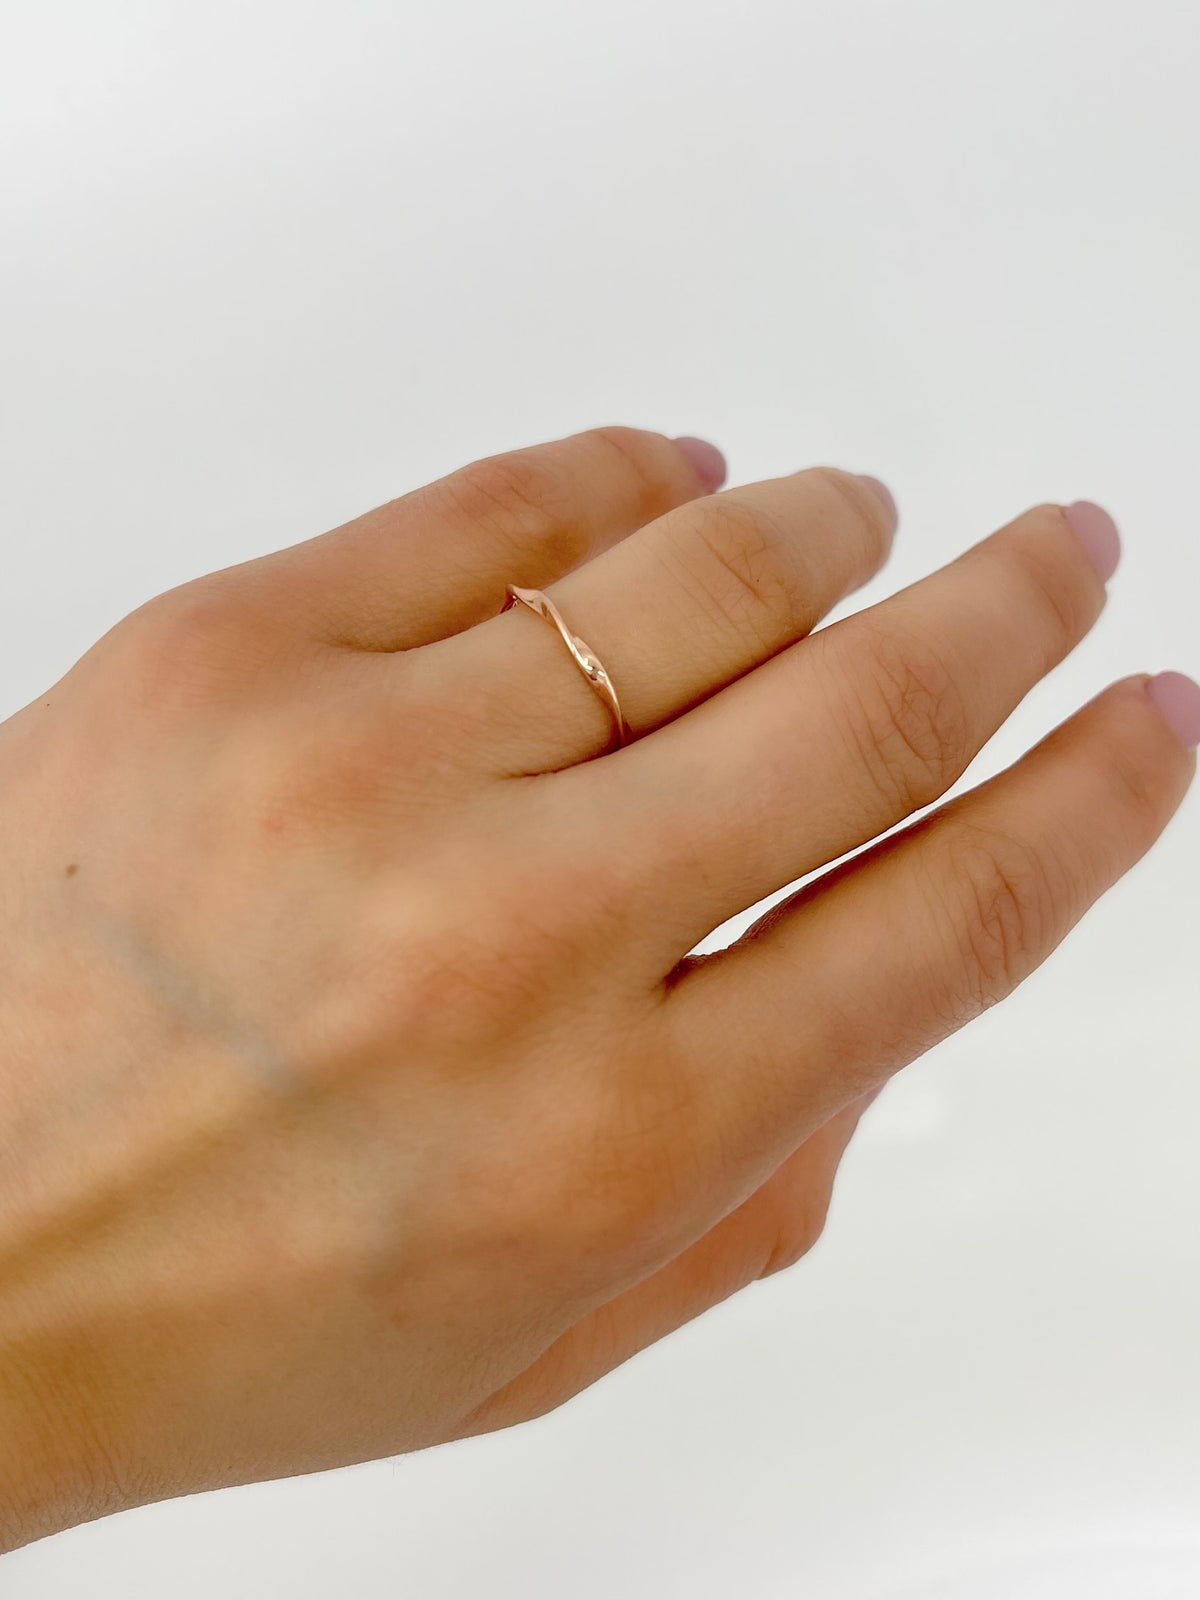 10K Rose Gold Twisty Patterned Ring, size 6.5